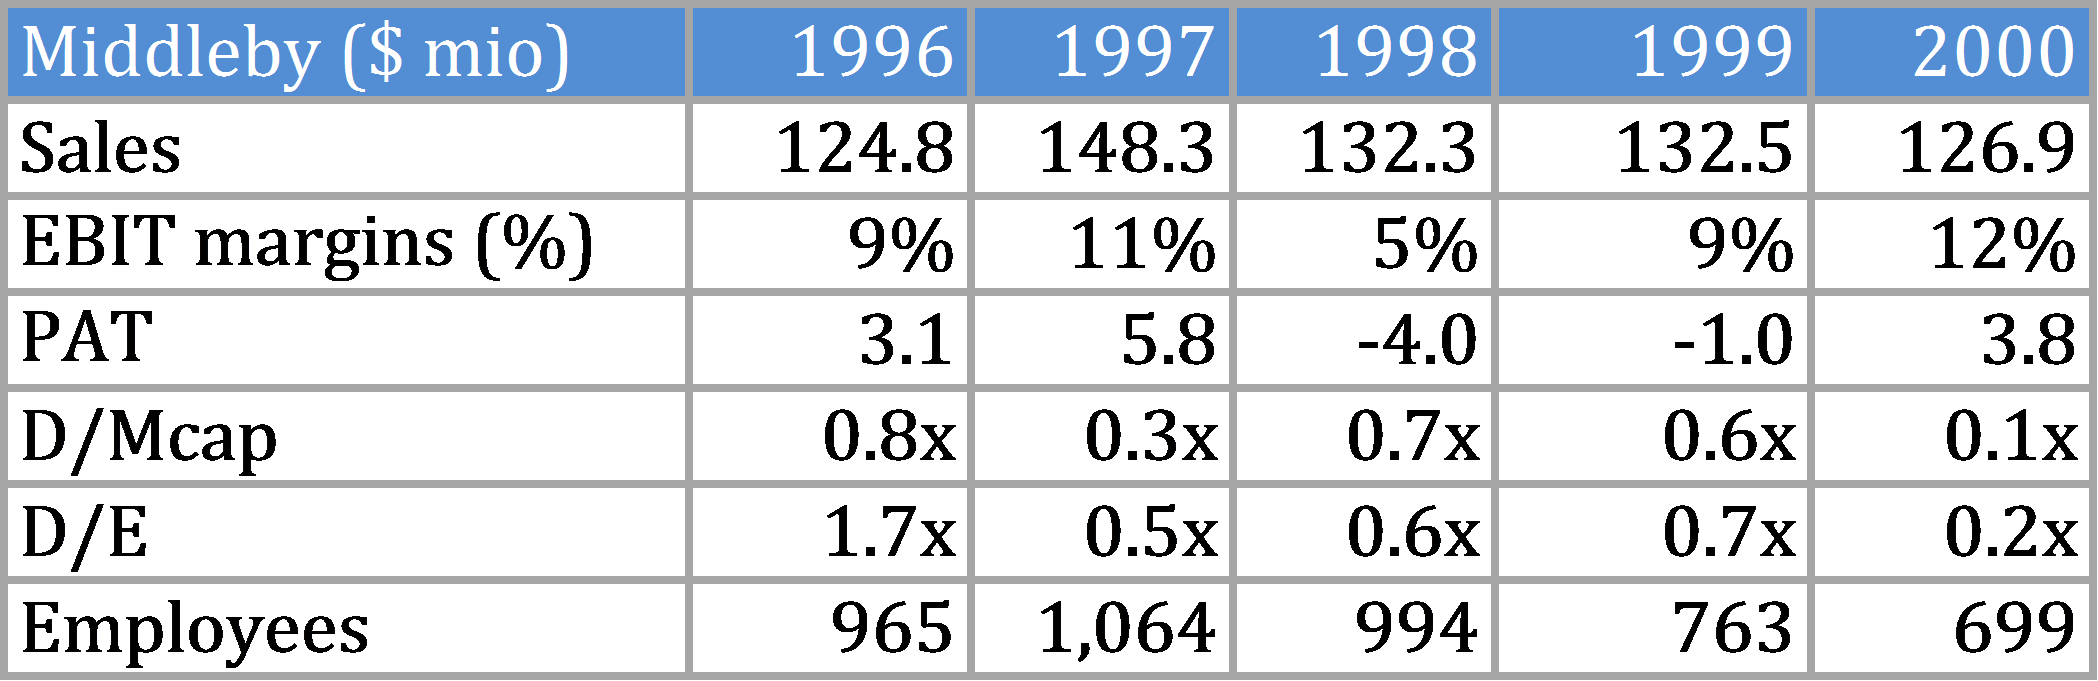 MIDD Performance 1996 - 2000